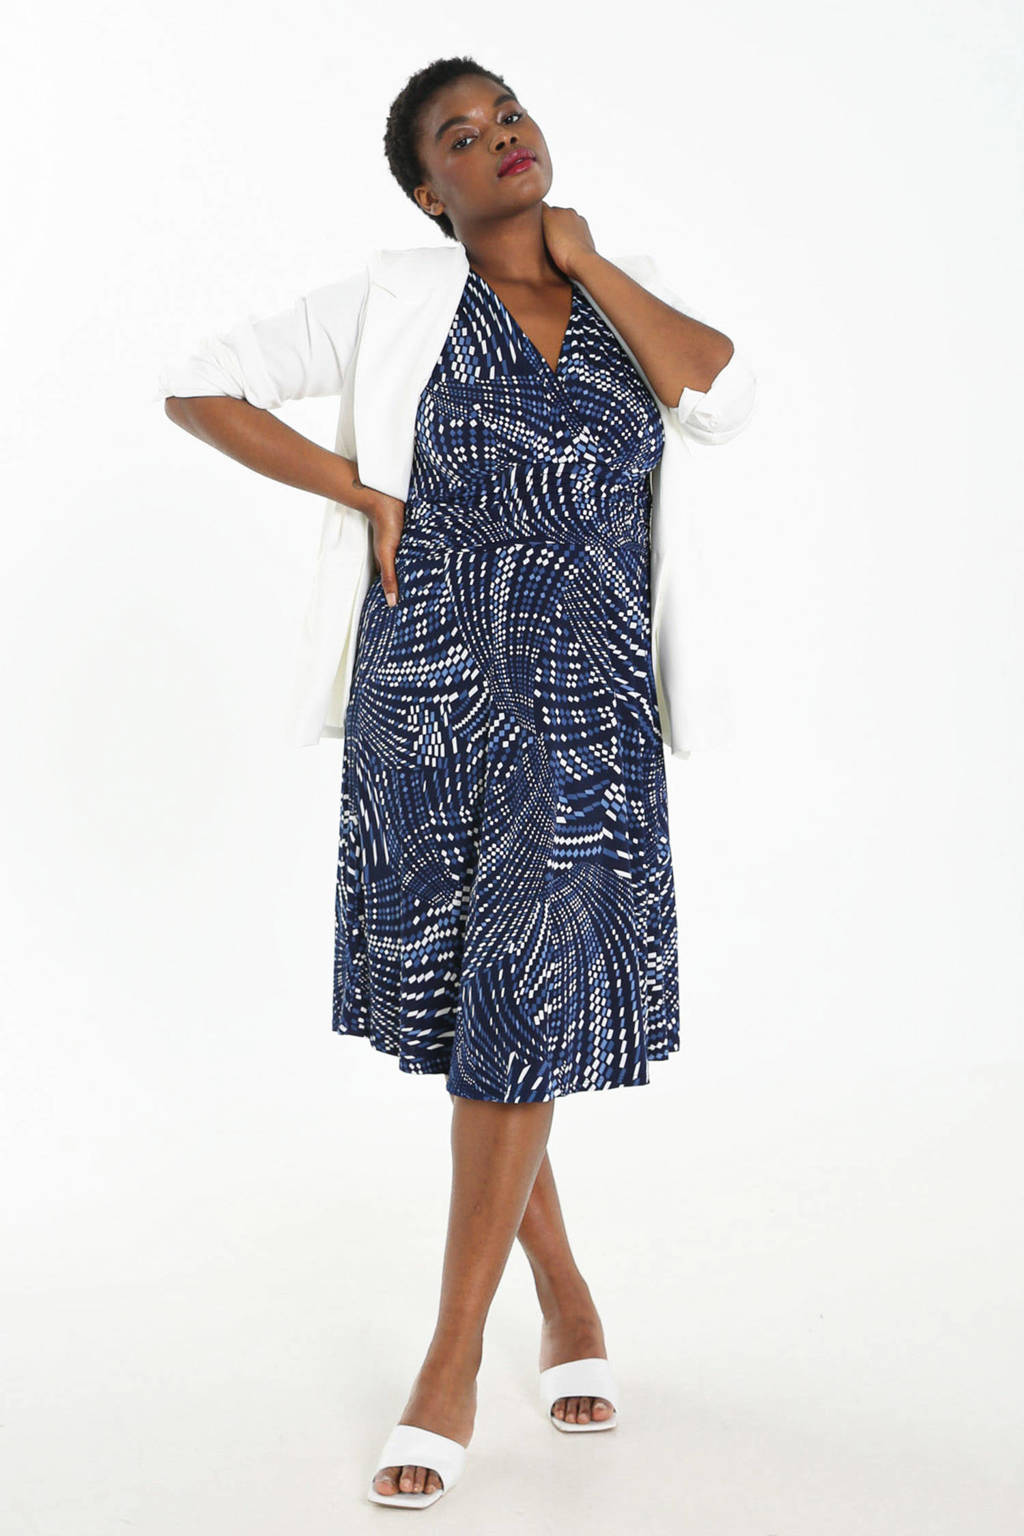 PROMISS A-lijn jurk met all over print blauw/wit/zwart